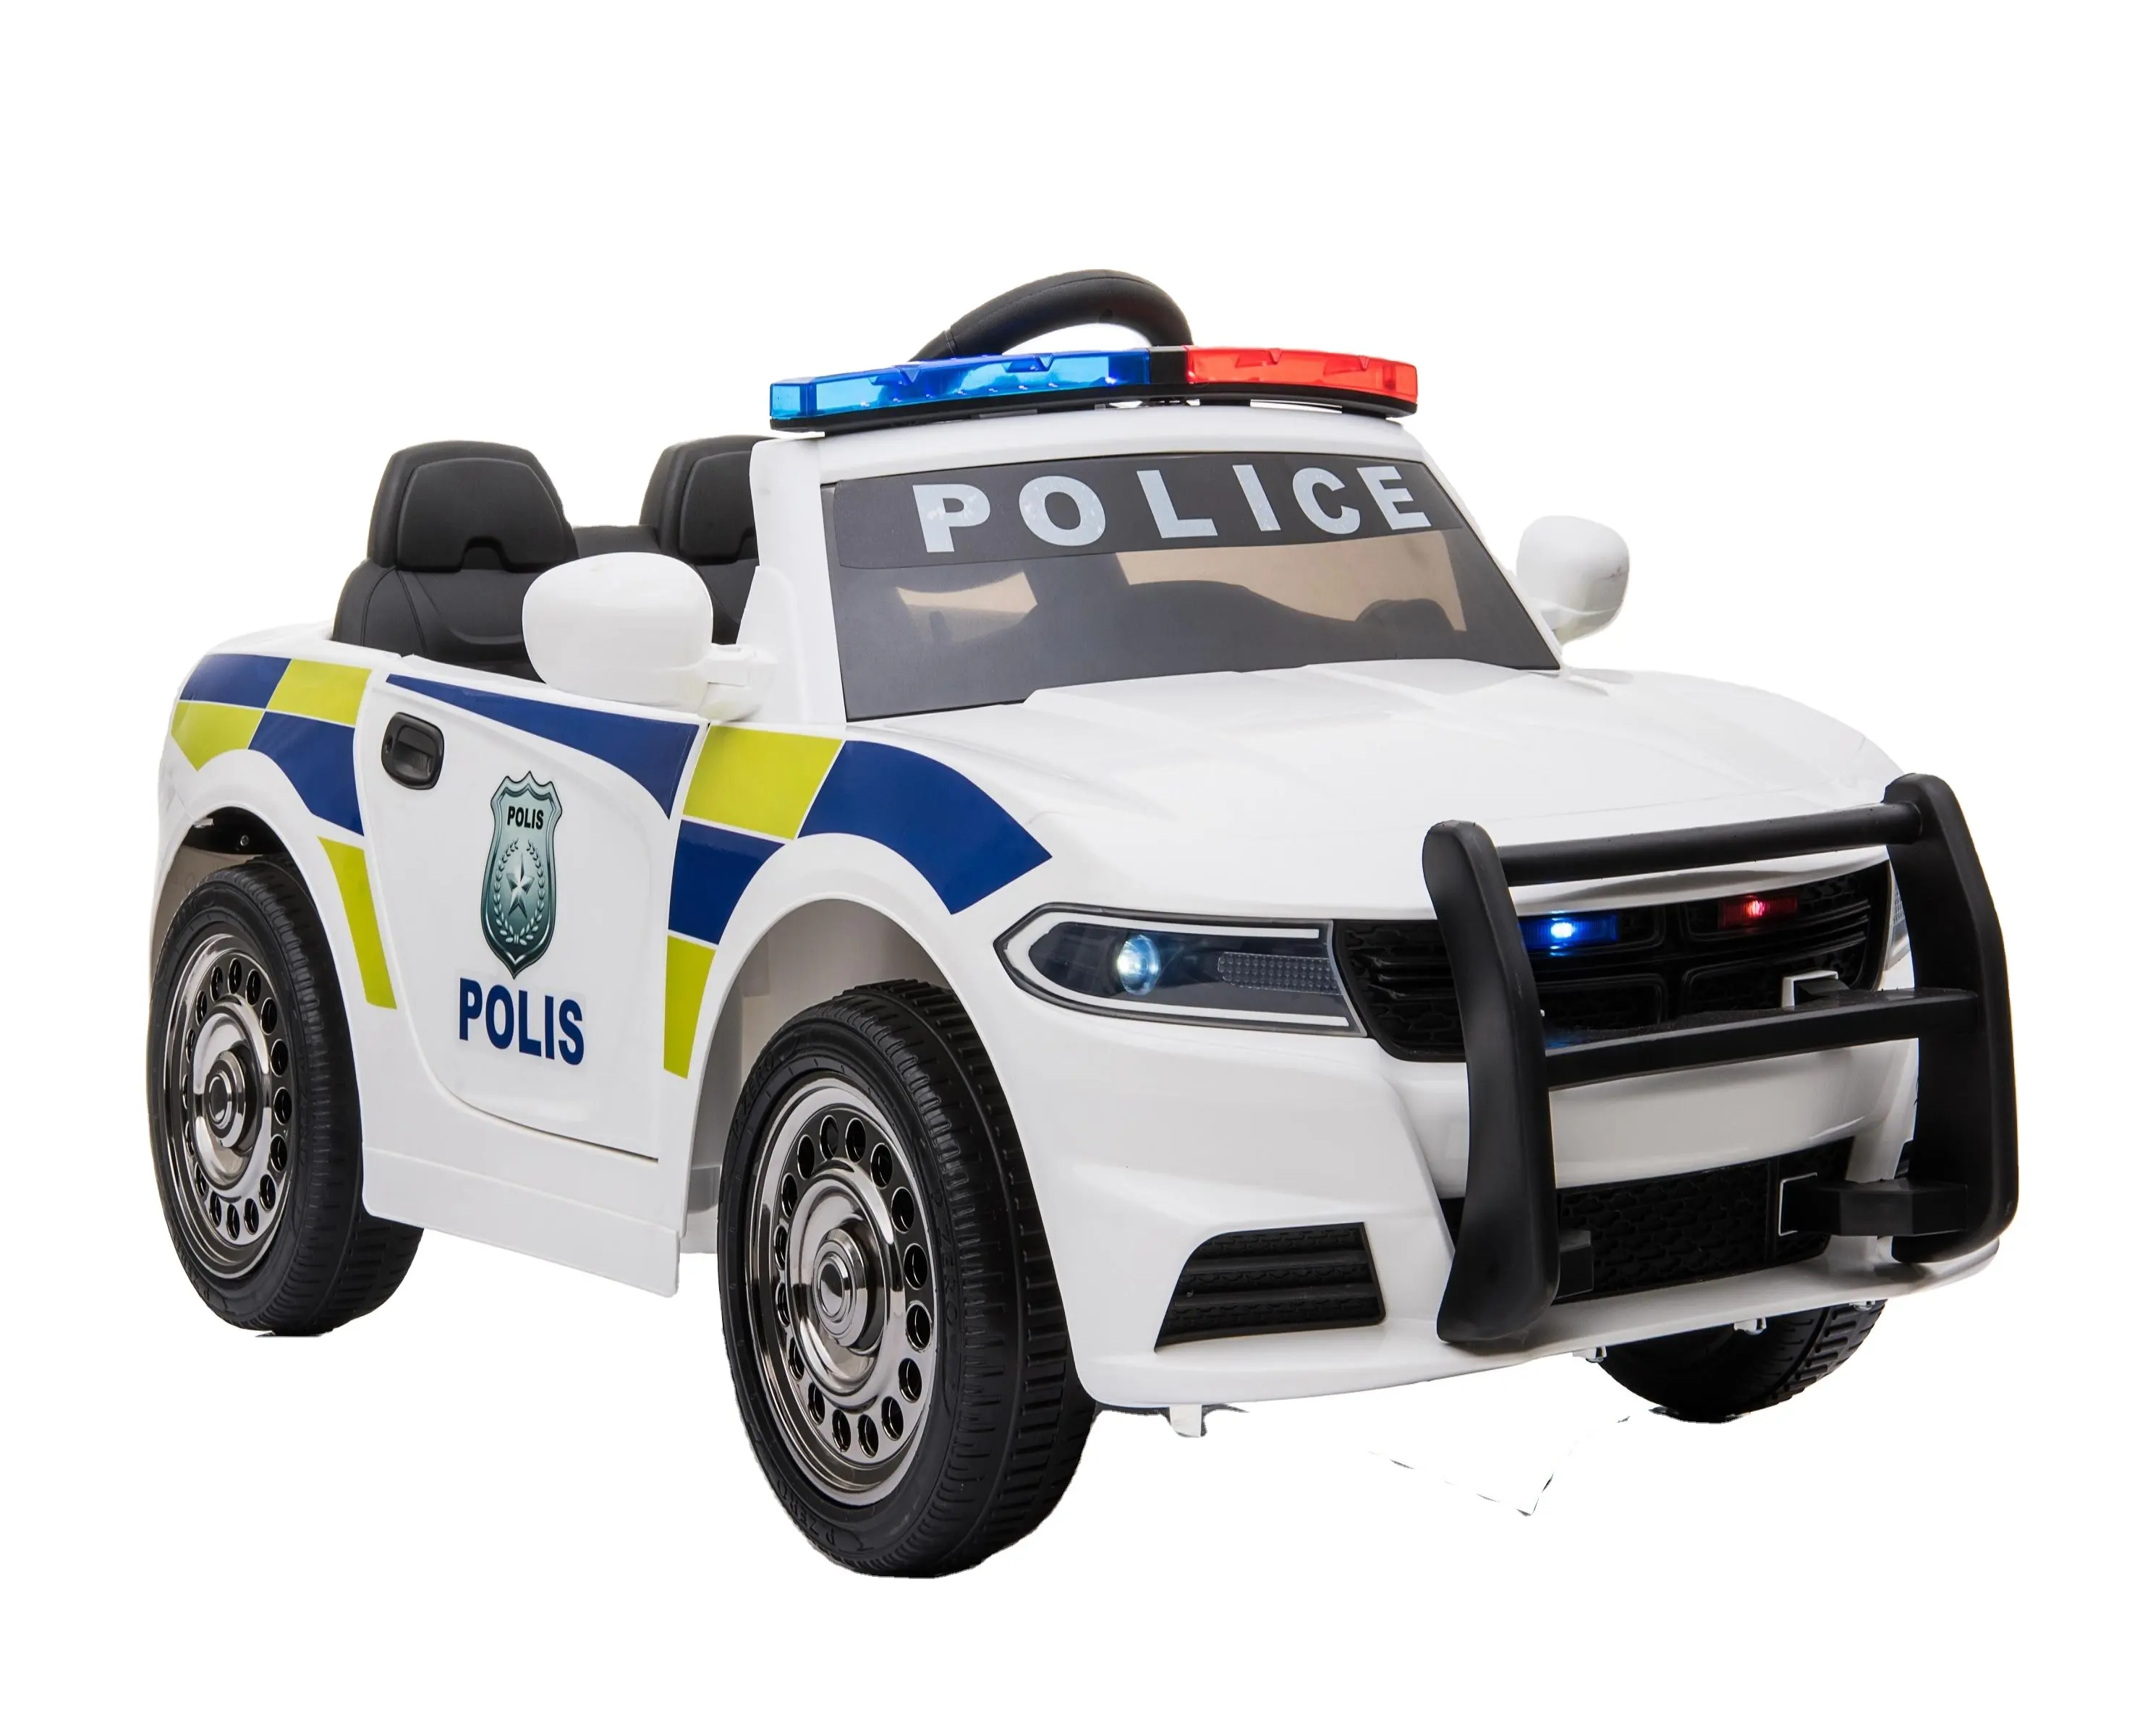 Mobil polisi elektrik bayi, mobil polisi elektrik anak-anak Bettery anak-anak mobil Remote berlisensi